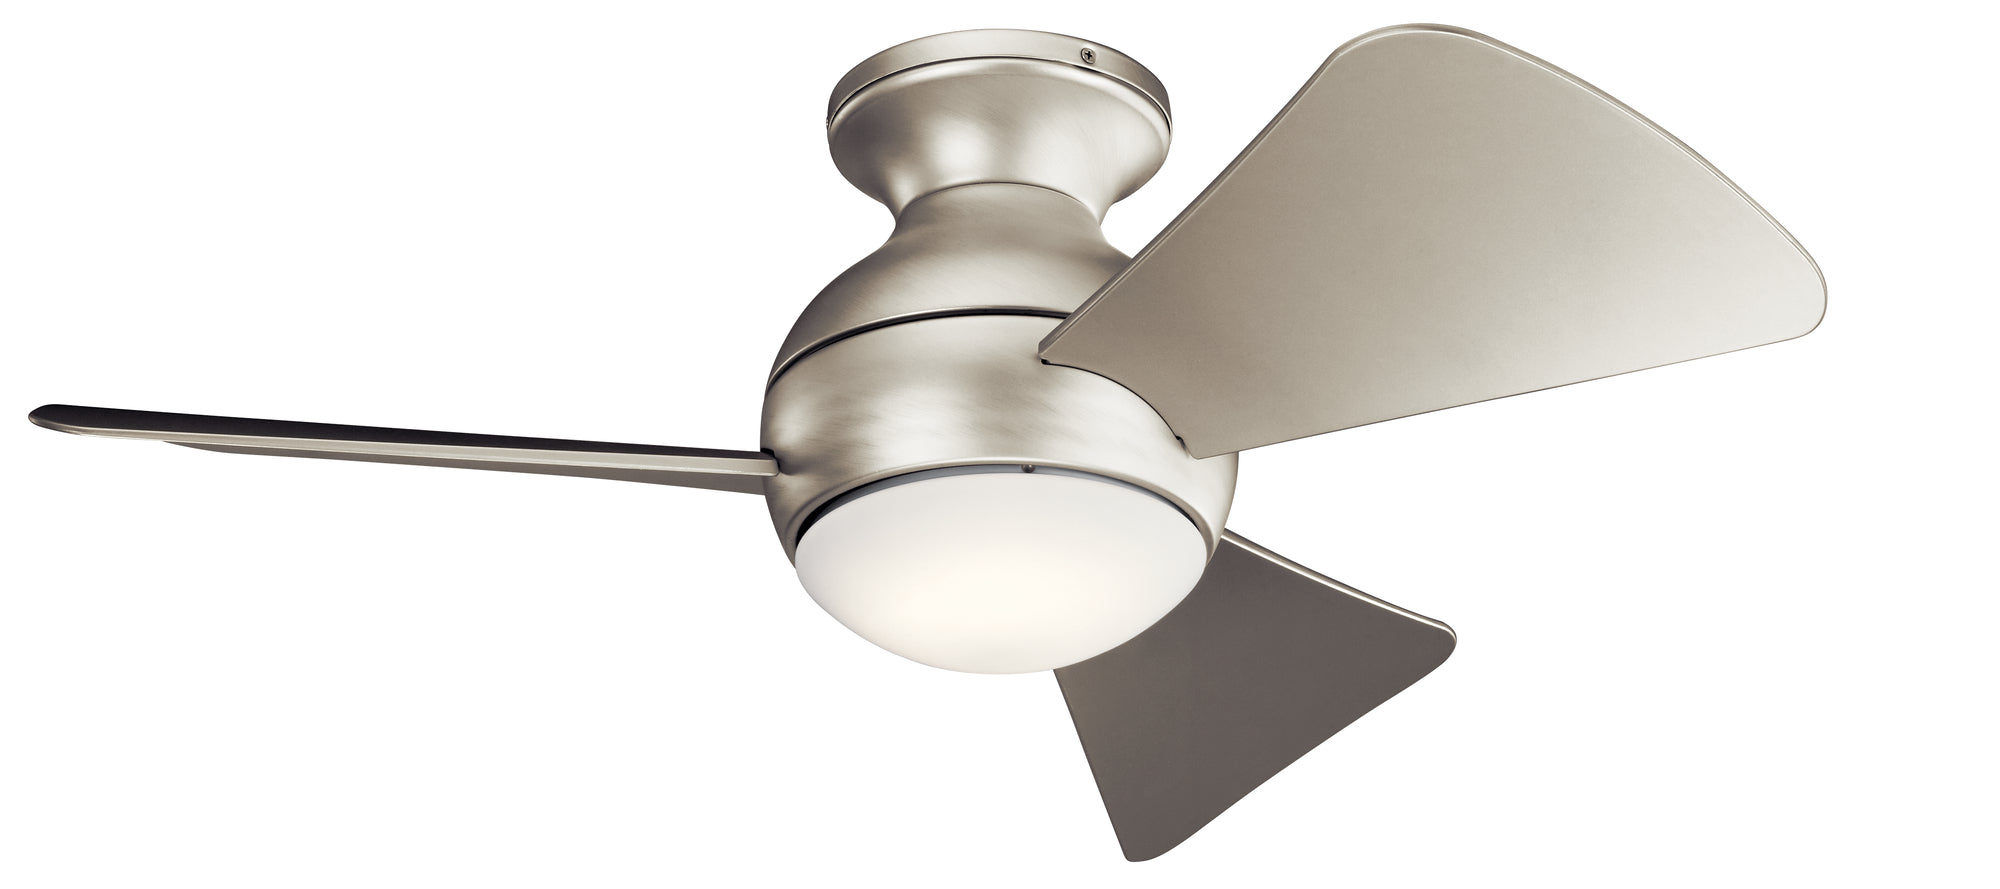 SOLA Ceiling fan Nickel INTEGRATED LED - 330150NI | KICHLER